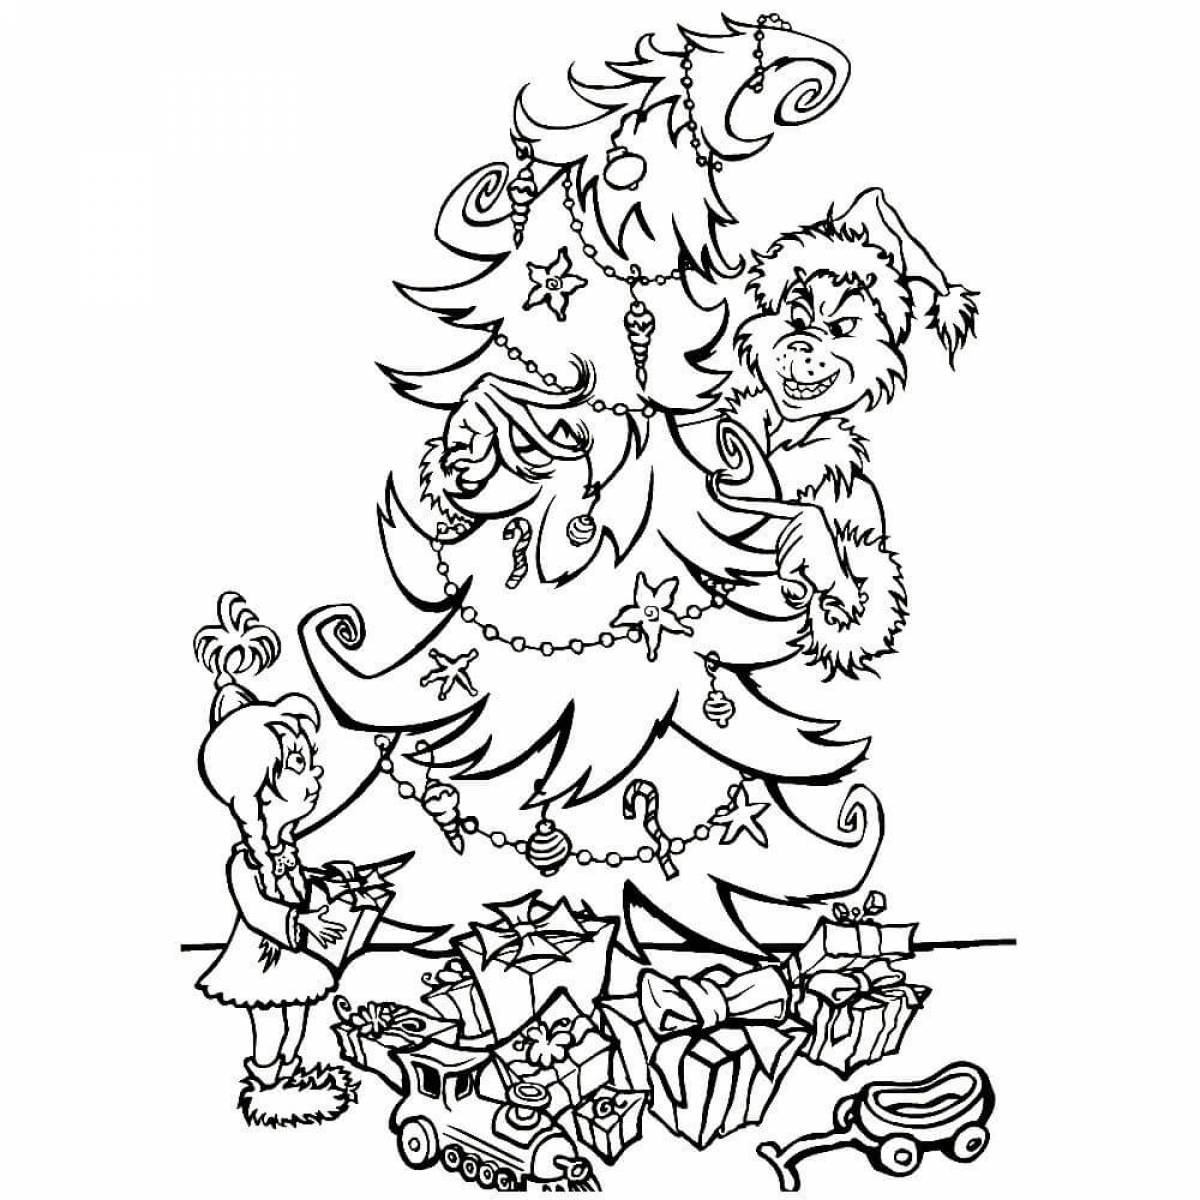 Grinch and Christmas tree